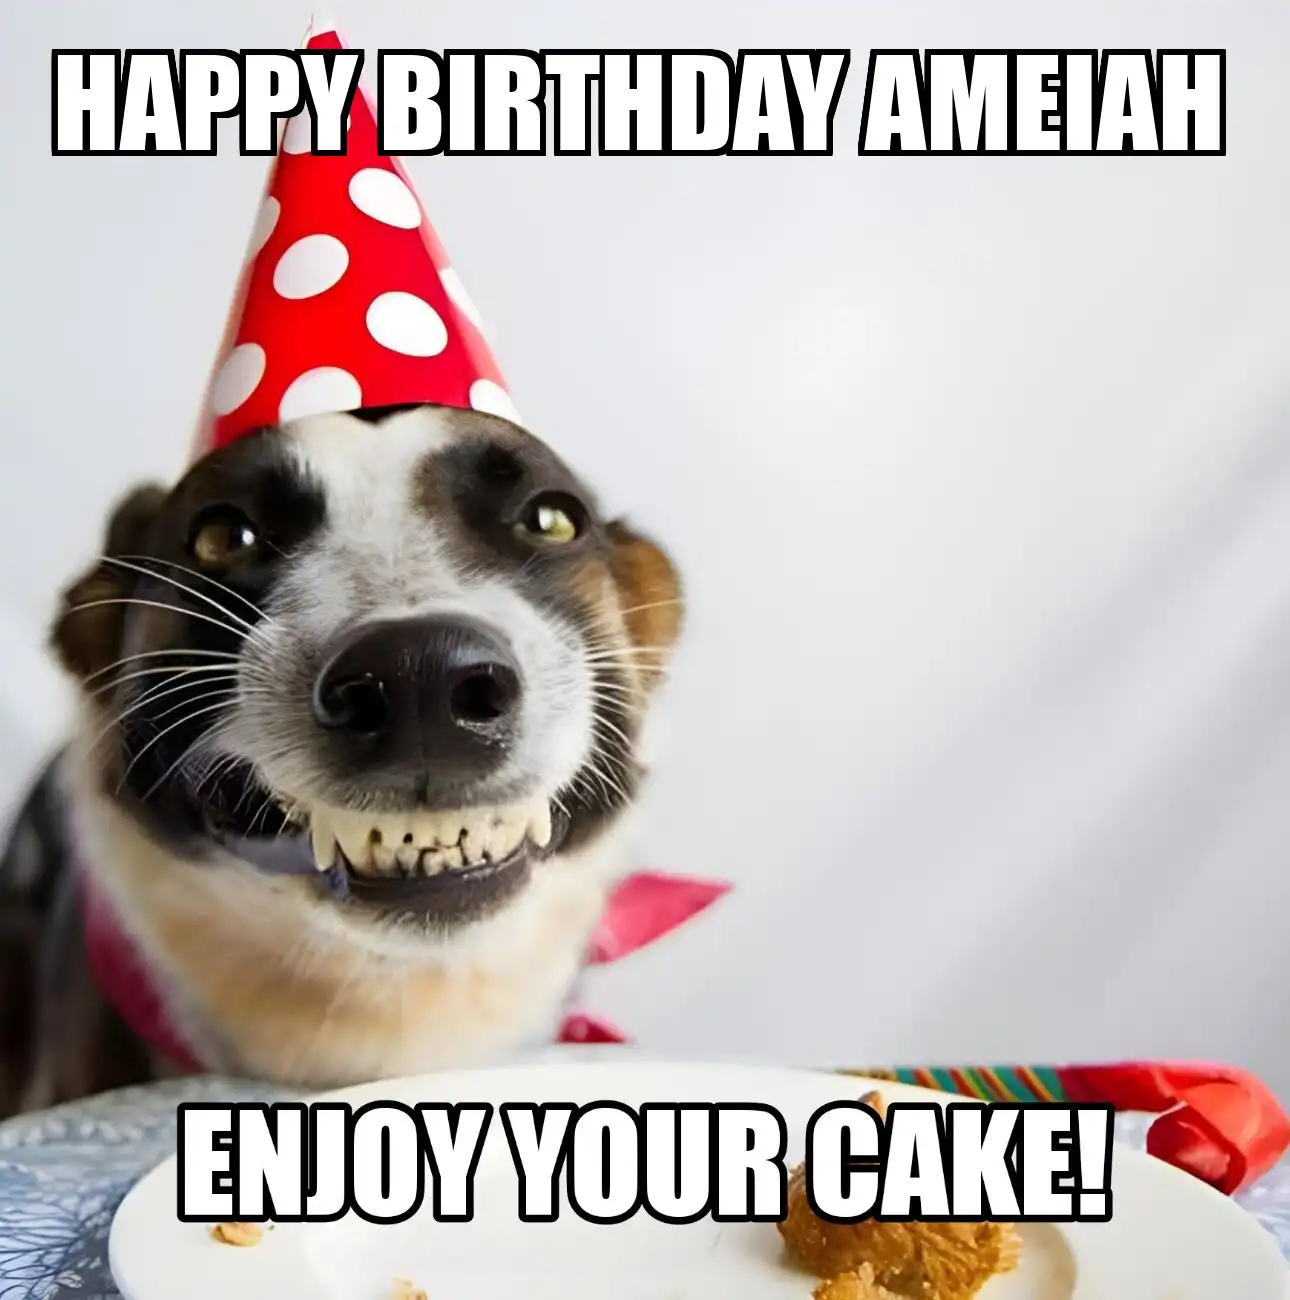 Happy Birthday Ameiah Enjoy Your Cake Dog Meme